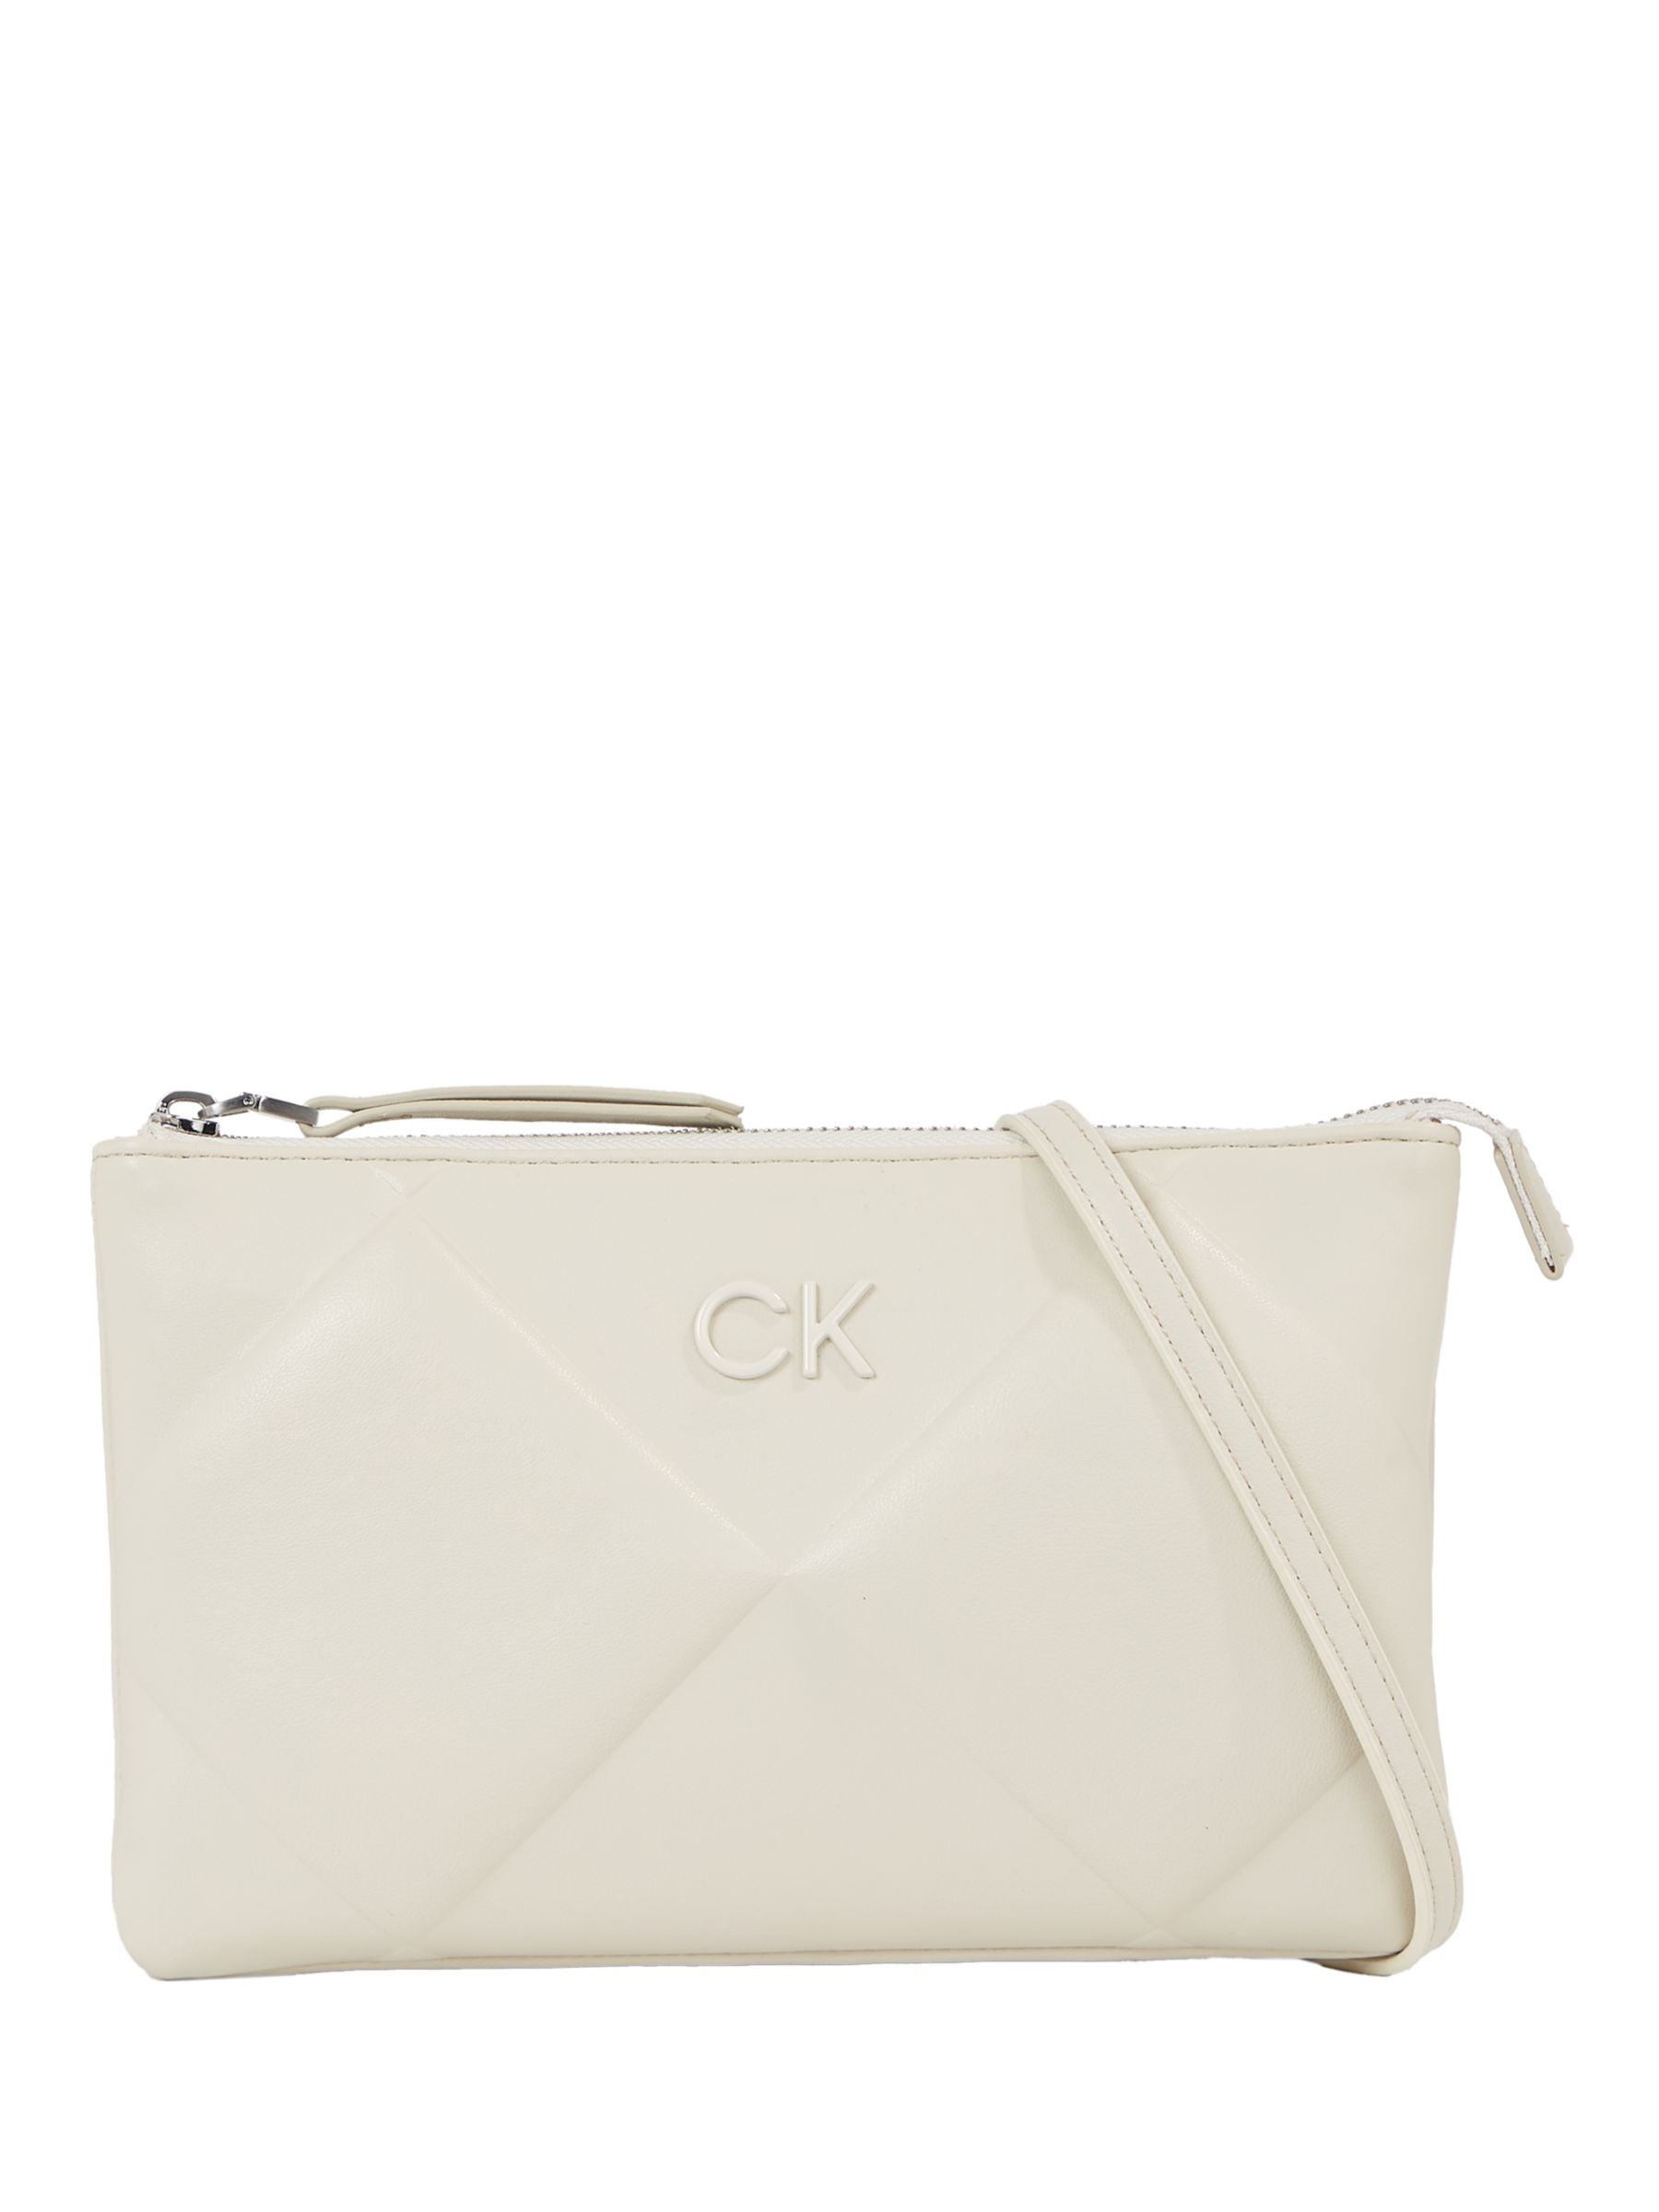 Calvin Klein Quilted Crossbody Bag, DK Ecru